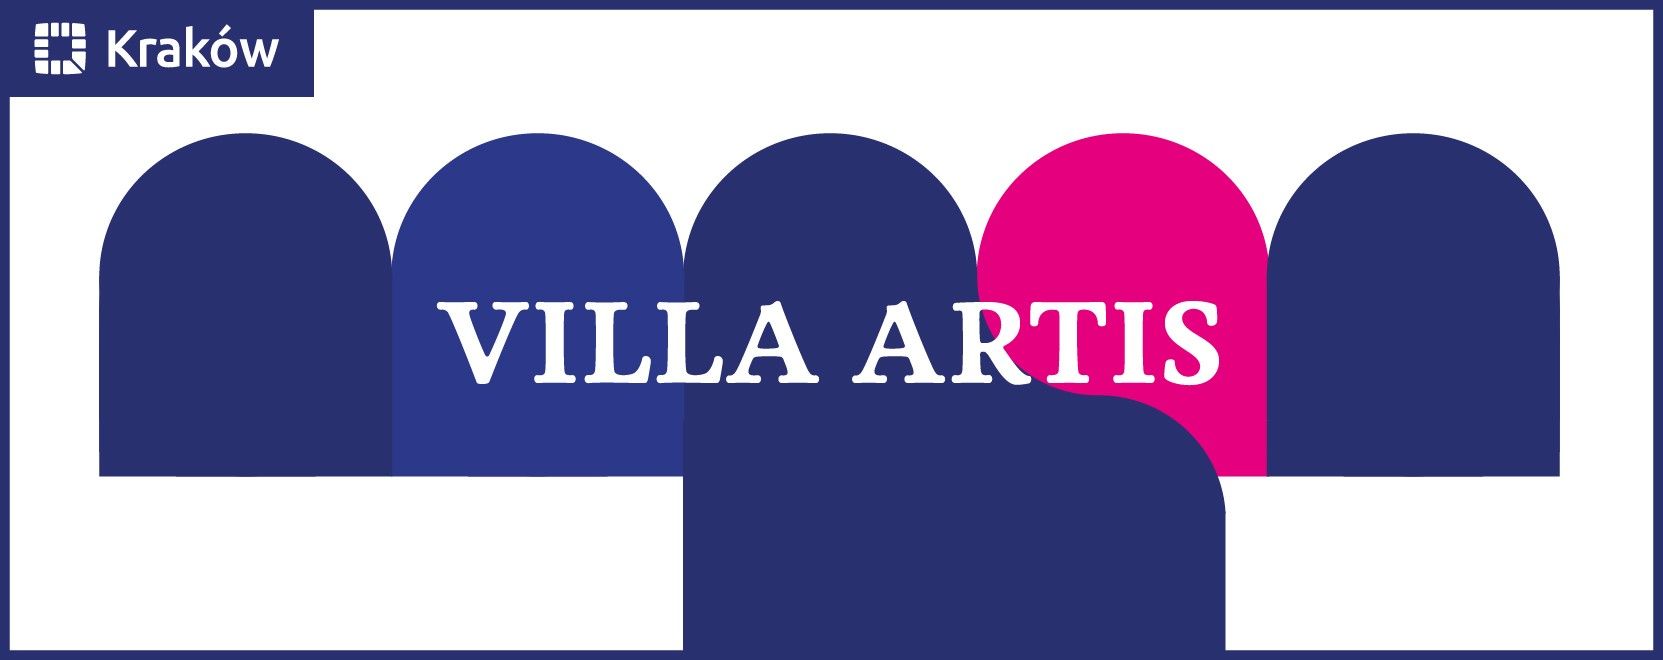 grafika ozdobna z napisem: Villa Artis